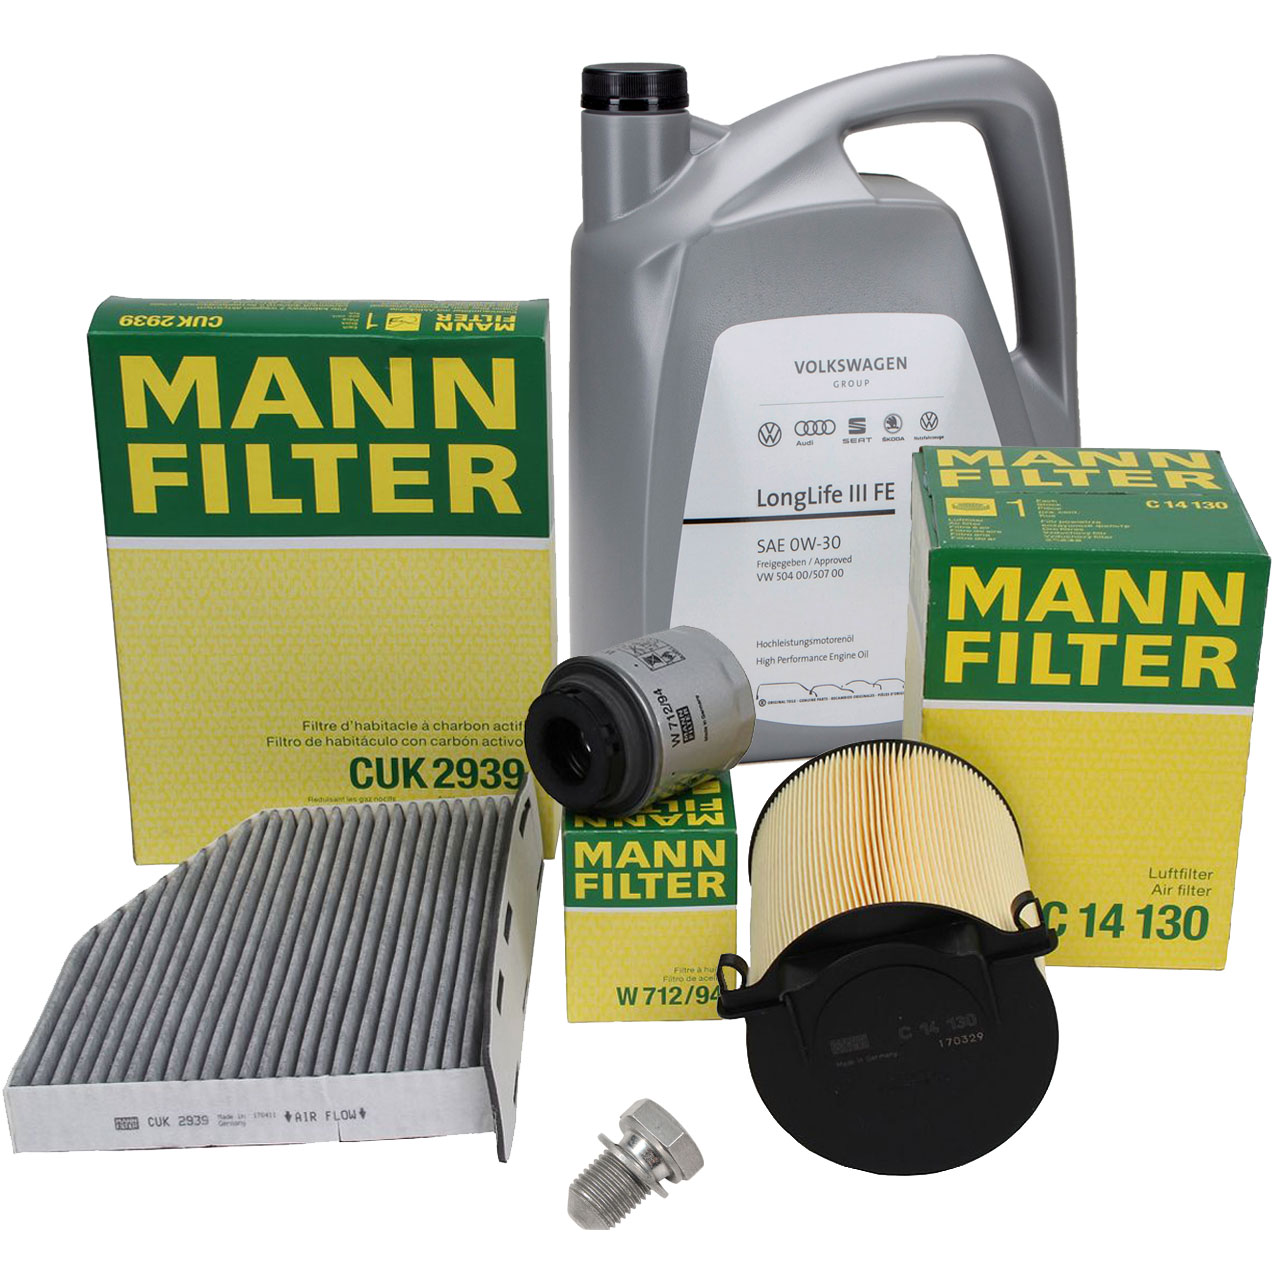 MANN Filterset + 5L ORIGINAL 0W30 Motoröl VW Golf 6 Passat B6/7 Touran AUDI A3 1.2/1.4 TSI